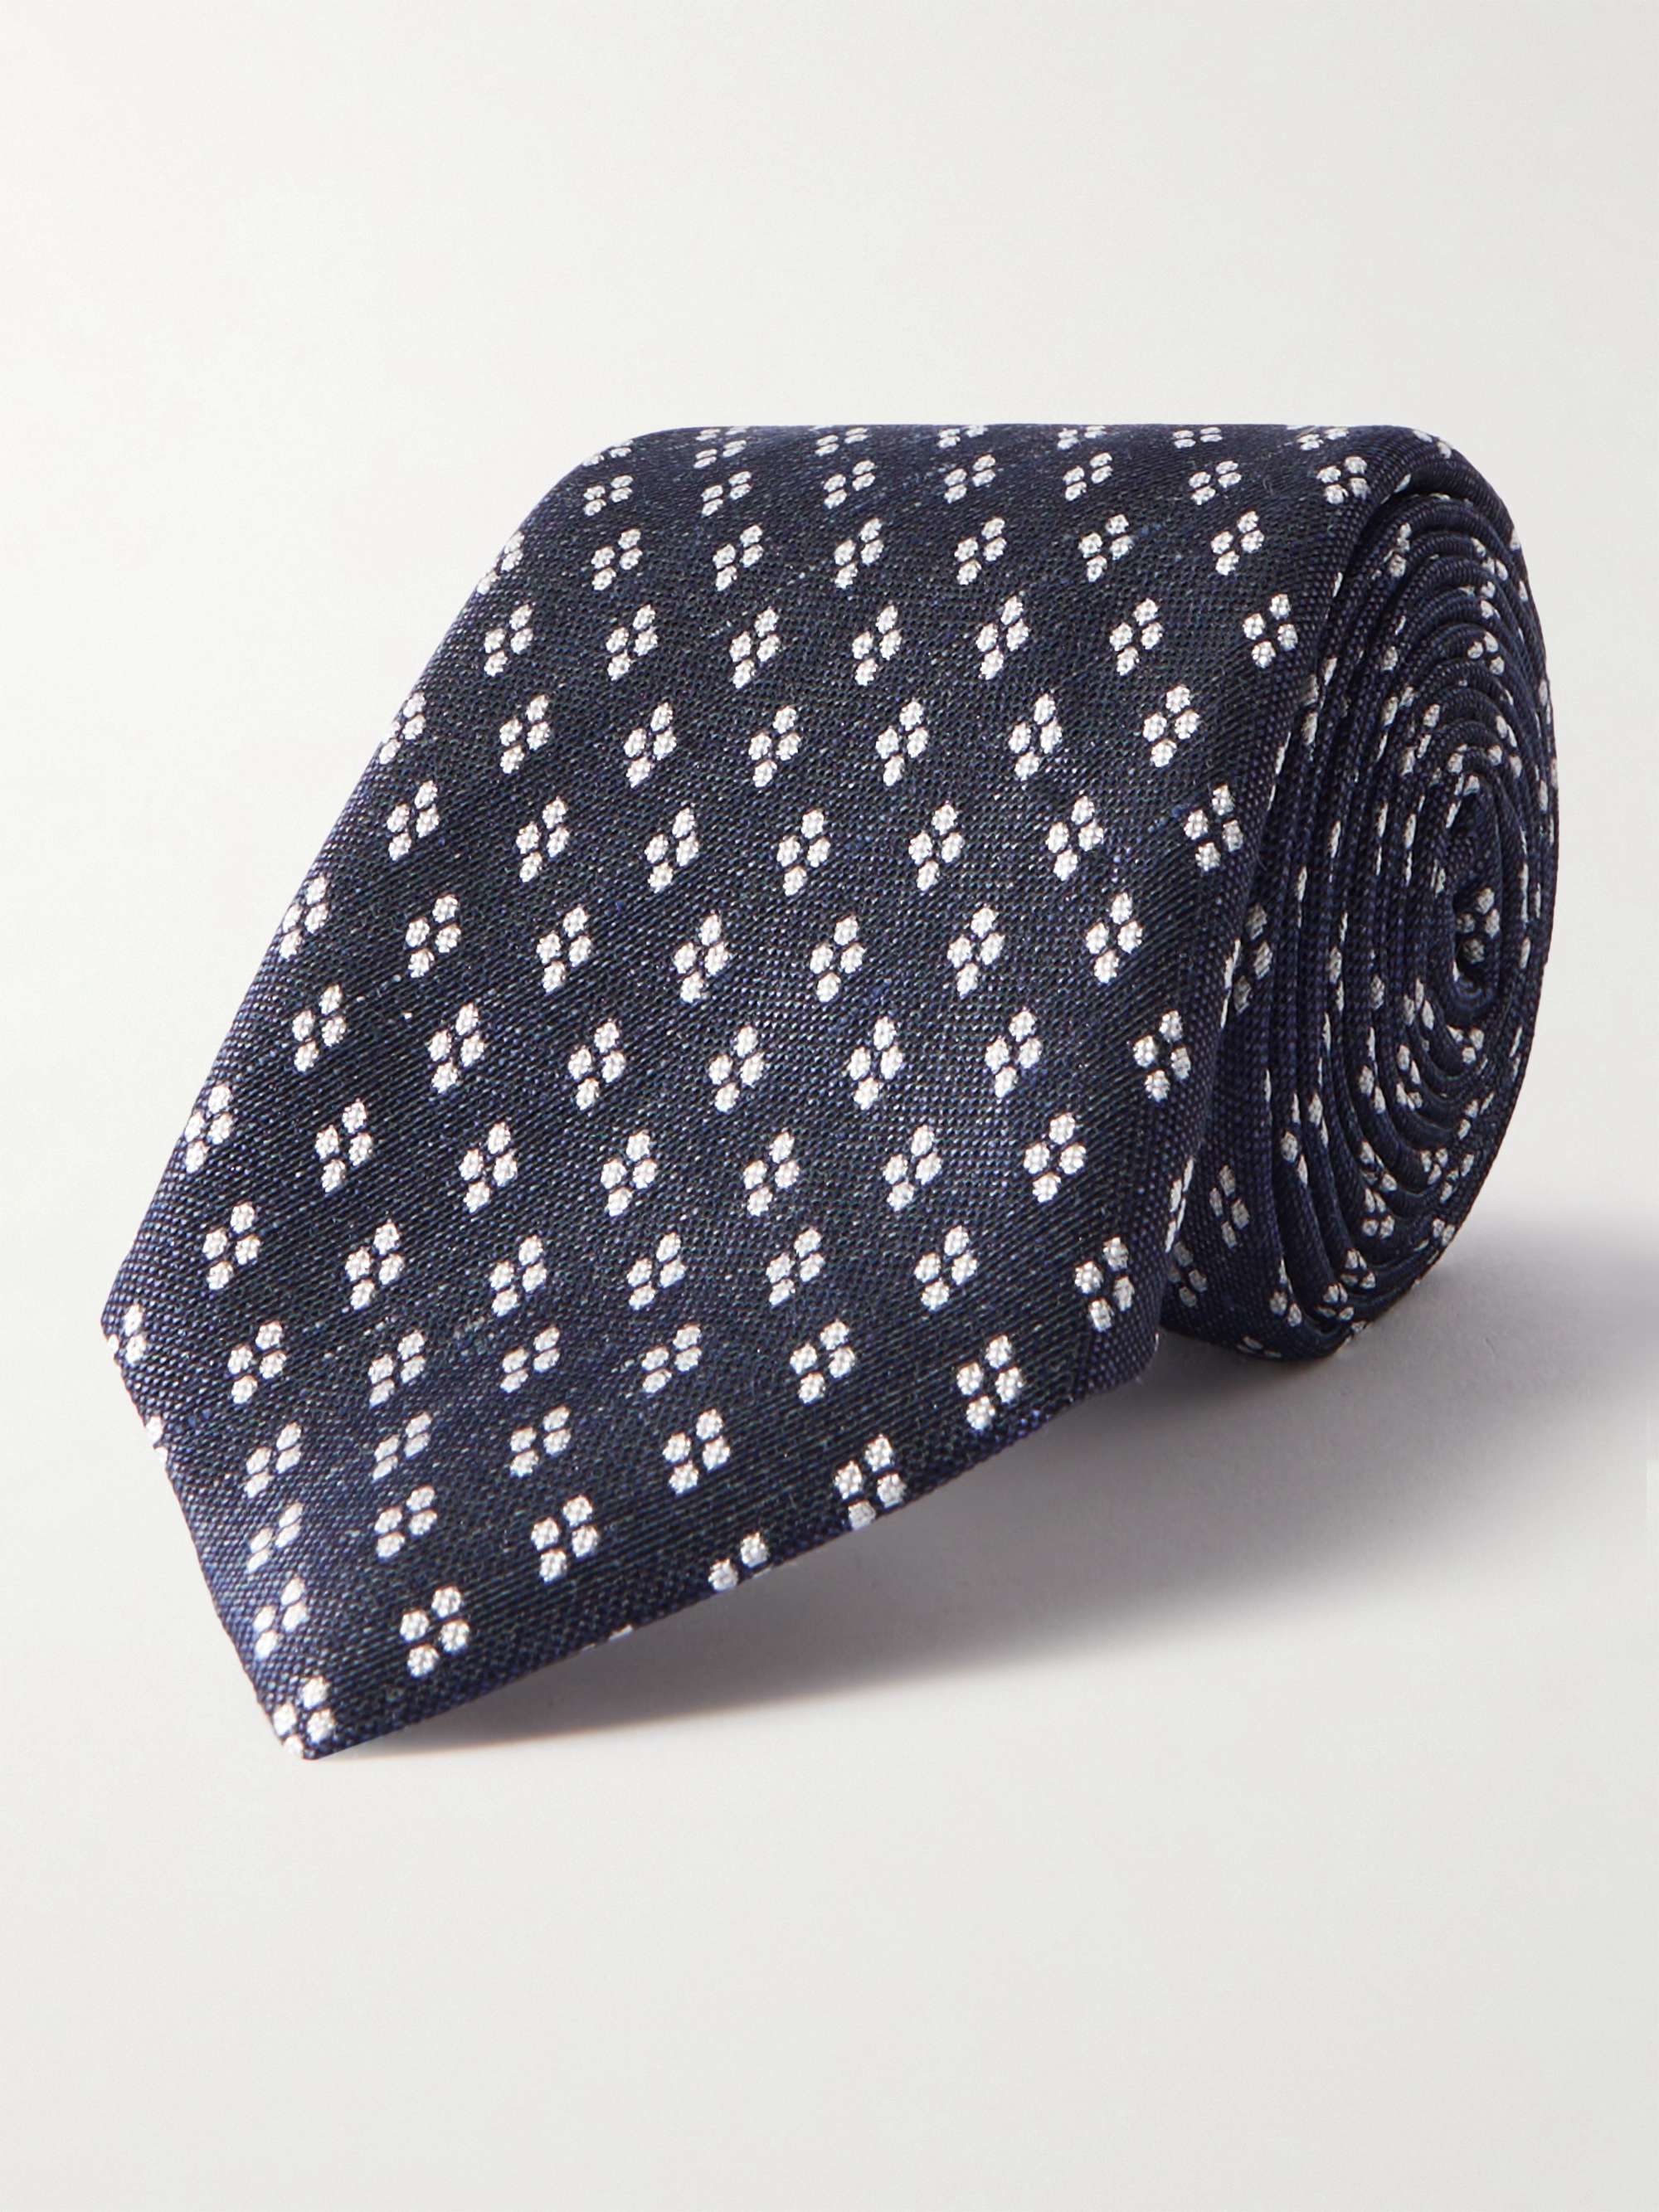 Cravatta in misto seta e lino, 8 cm | MR PORTER